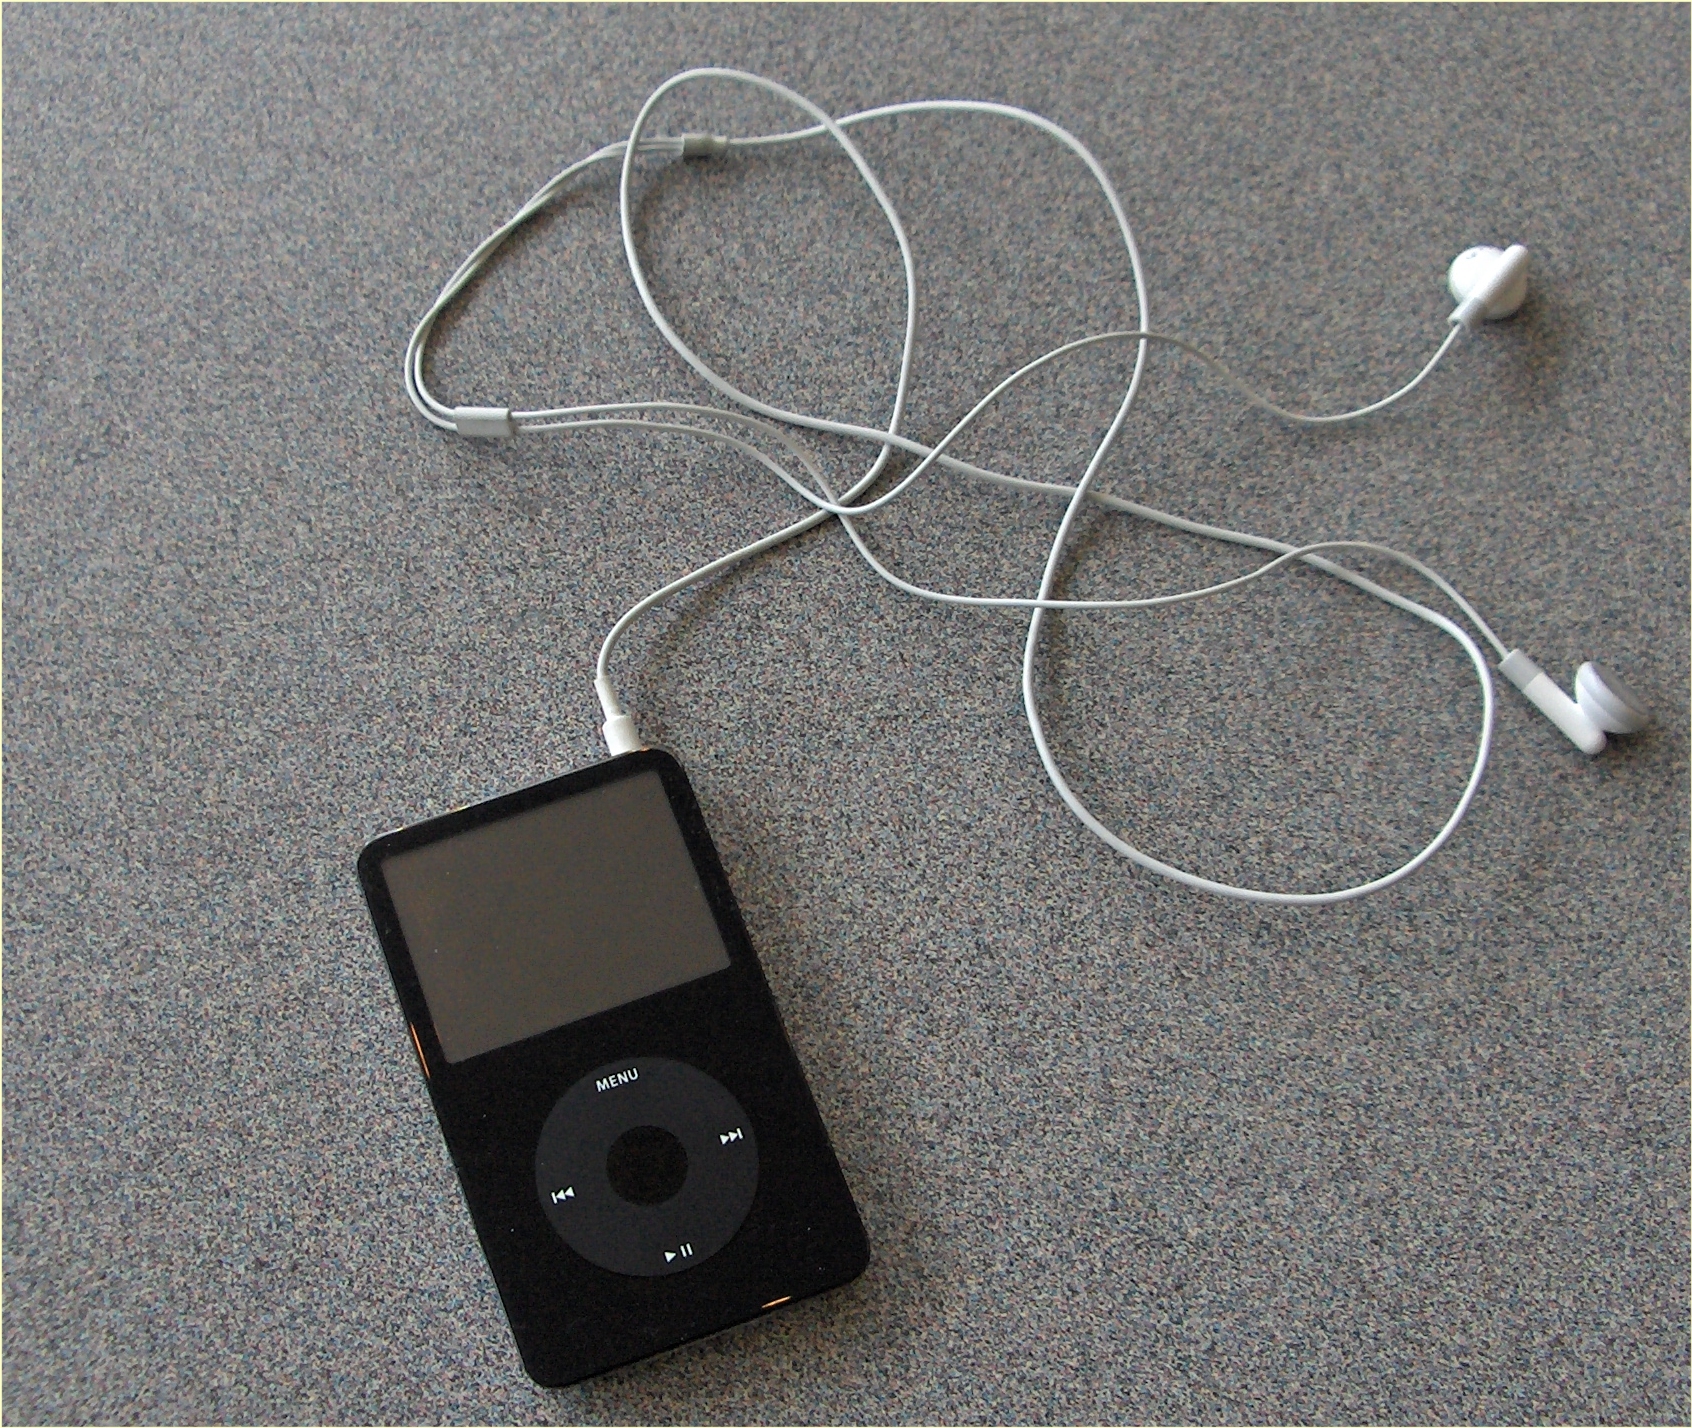 video iPod